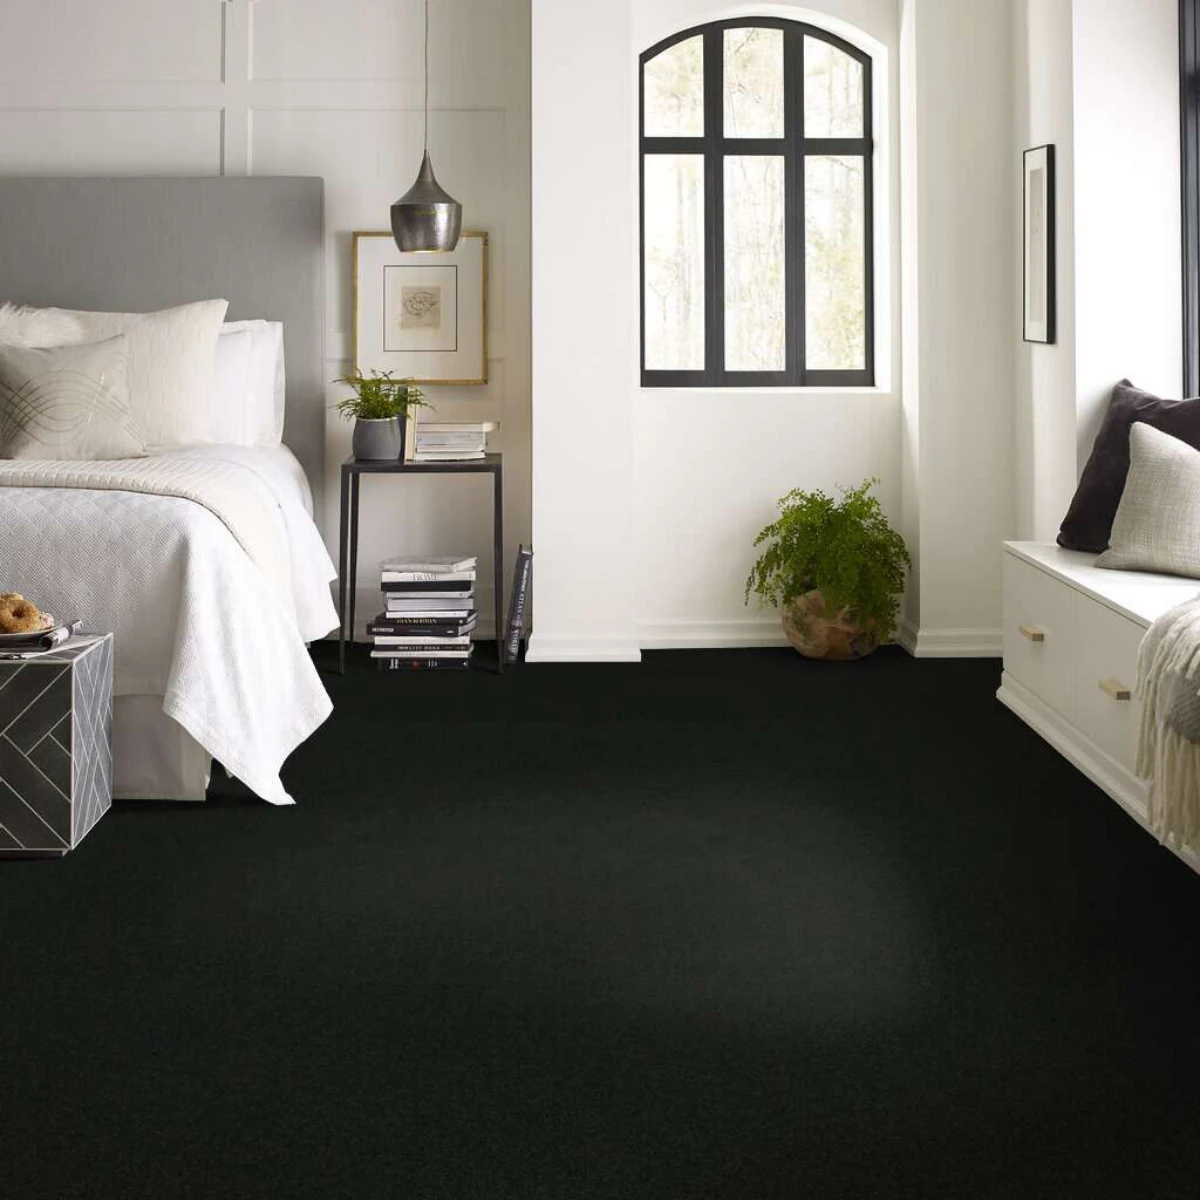 carpet colors black carpet in bedroom